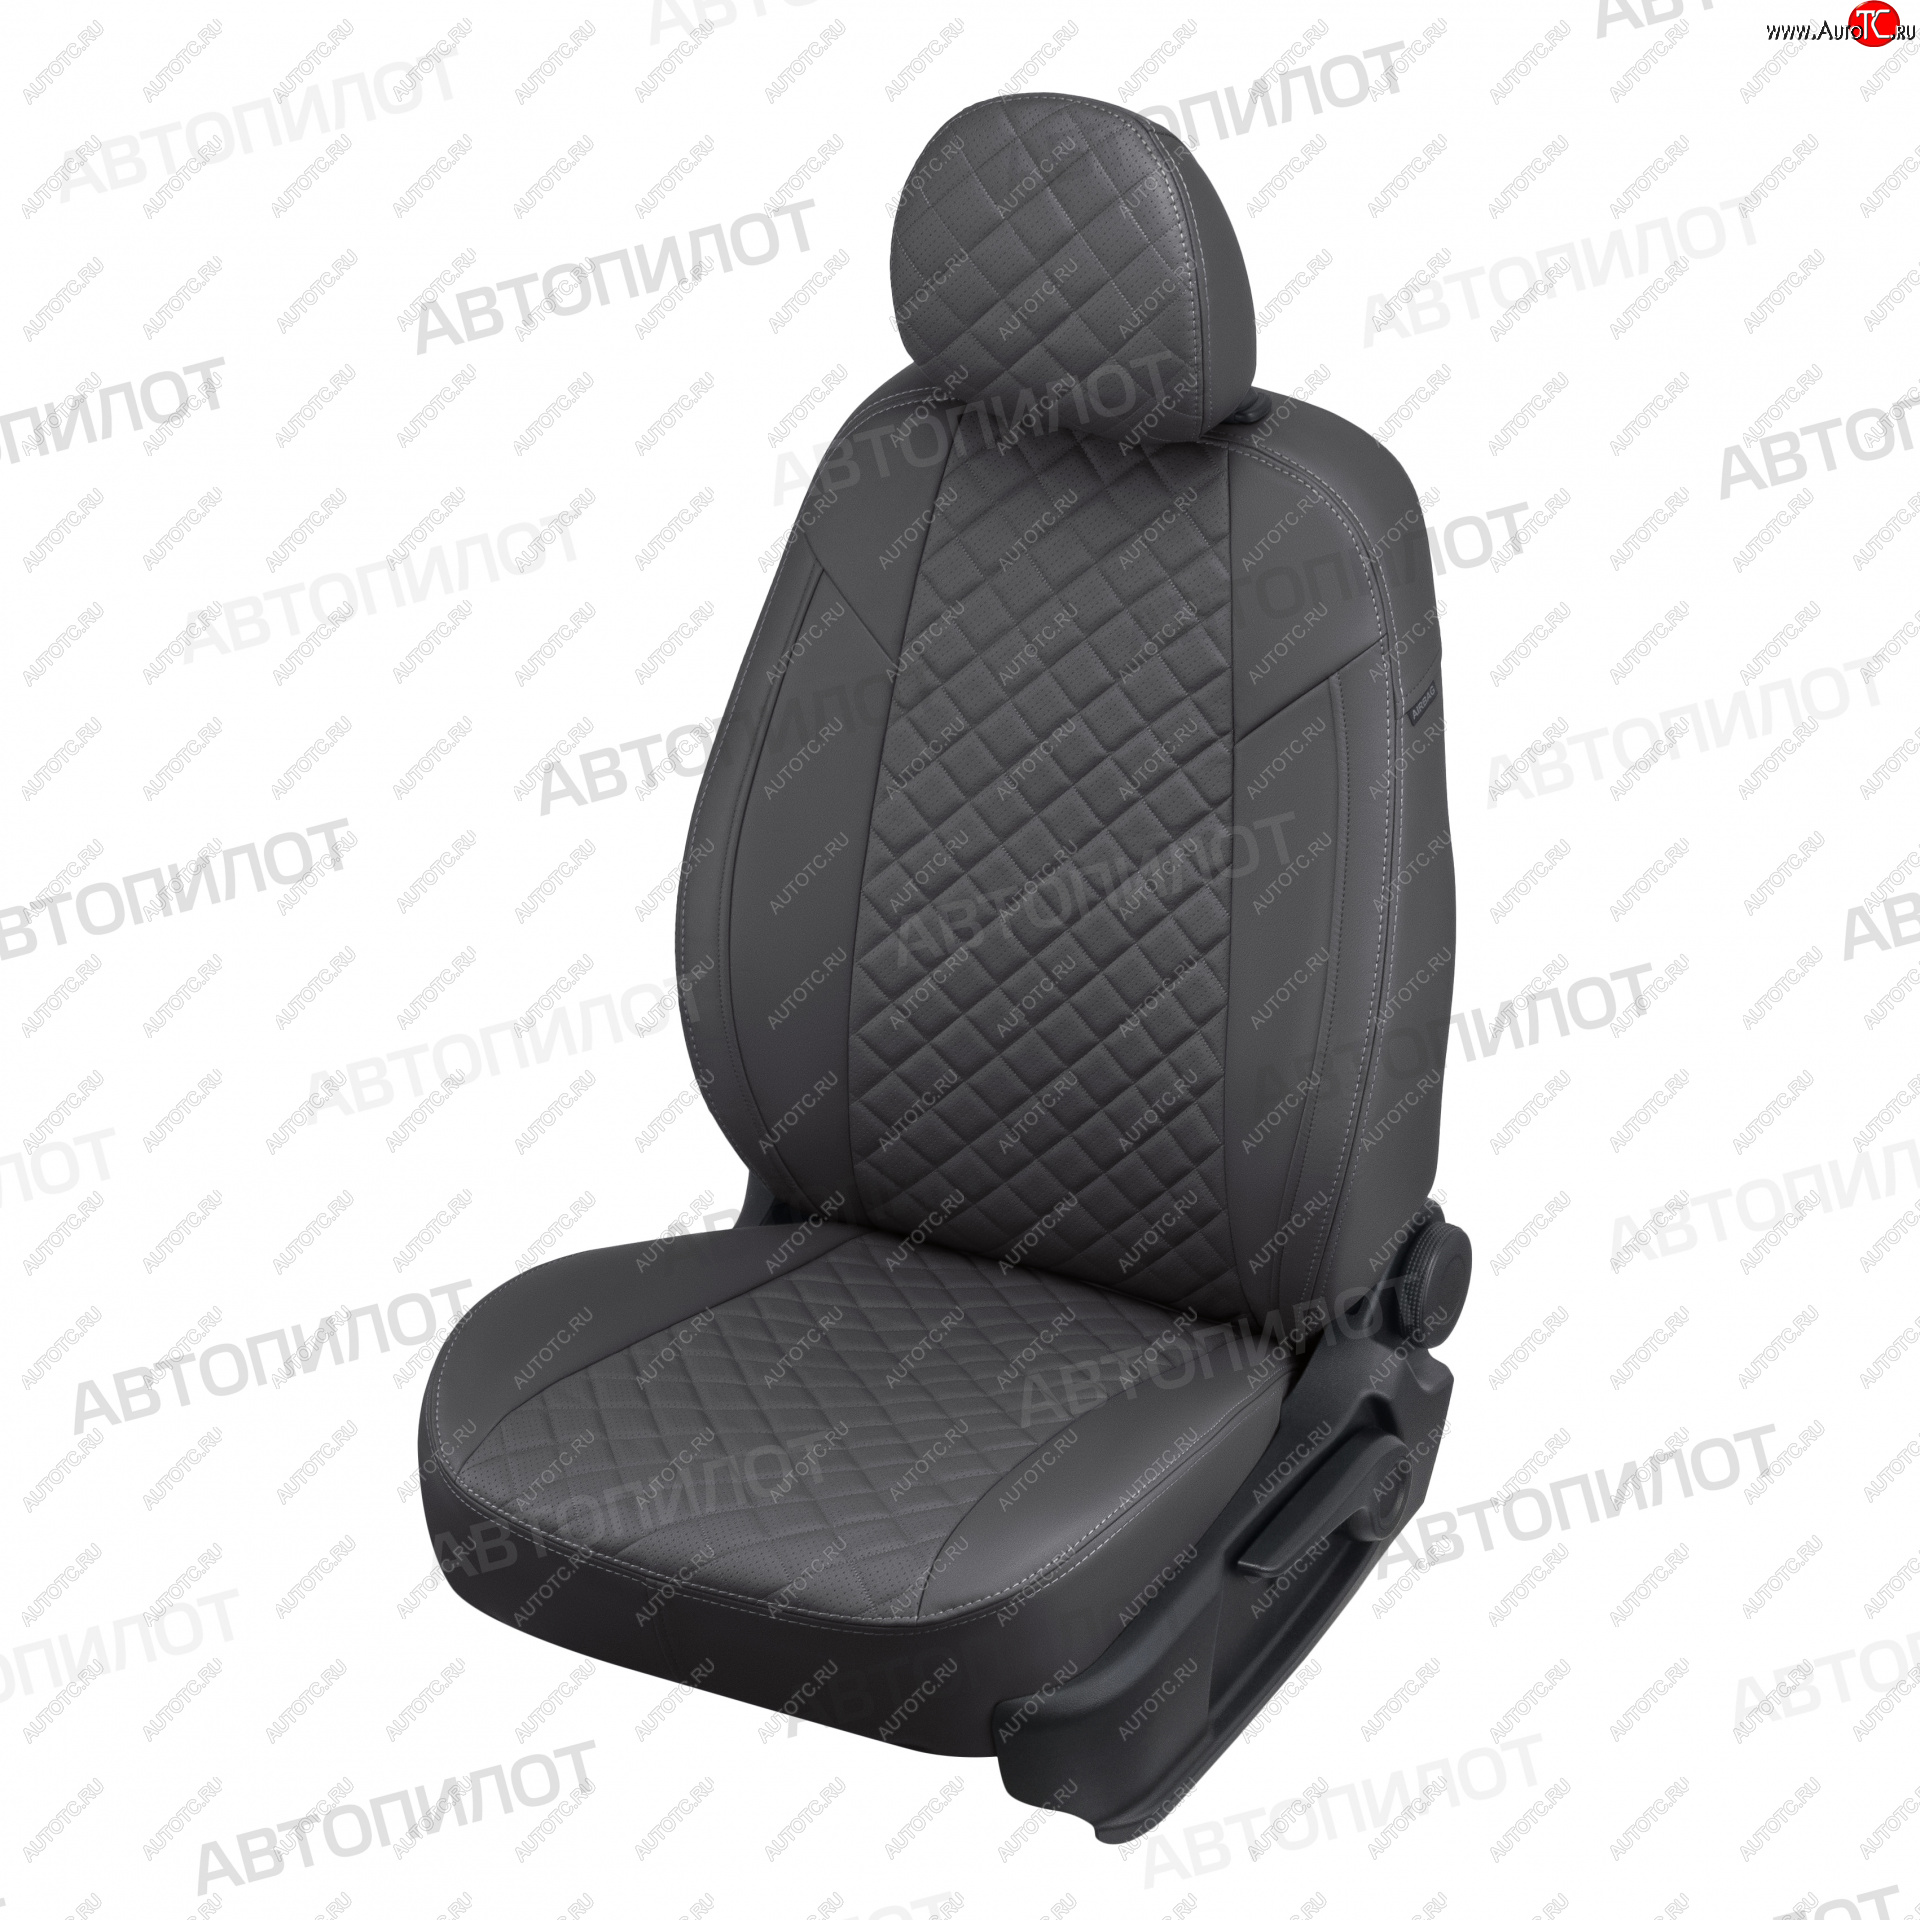 13 999 р. Чехлы сидений (экокожа) Автопилот Ромб  Chevrolet Trailblazer  GM800 (2012-2016) (темно-серый)